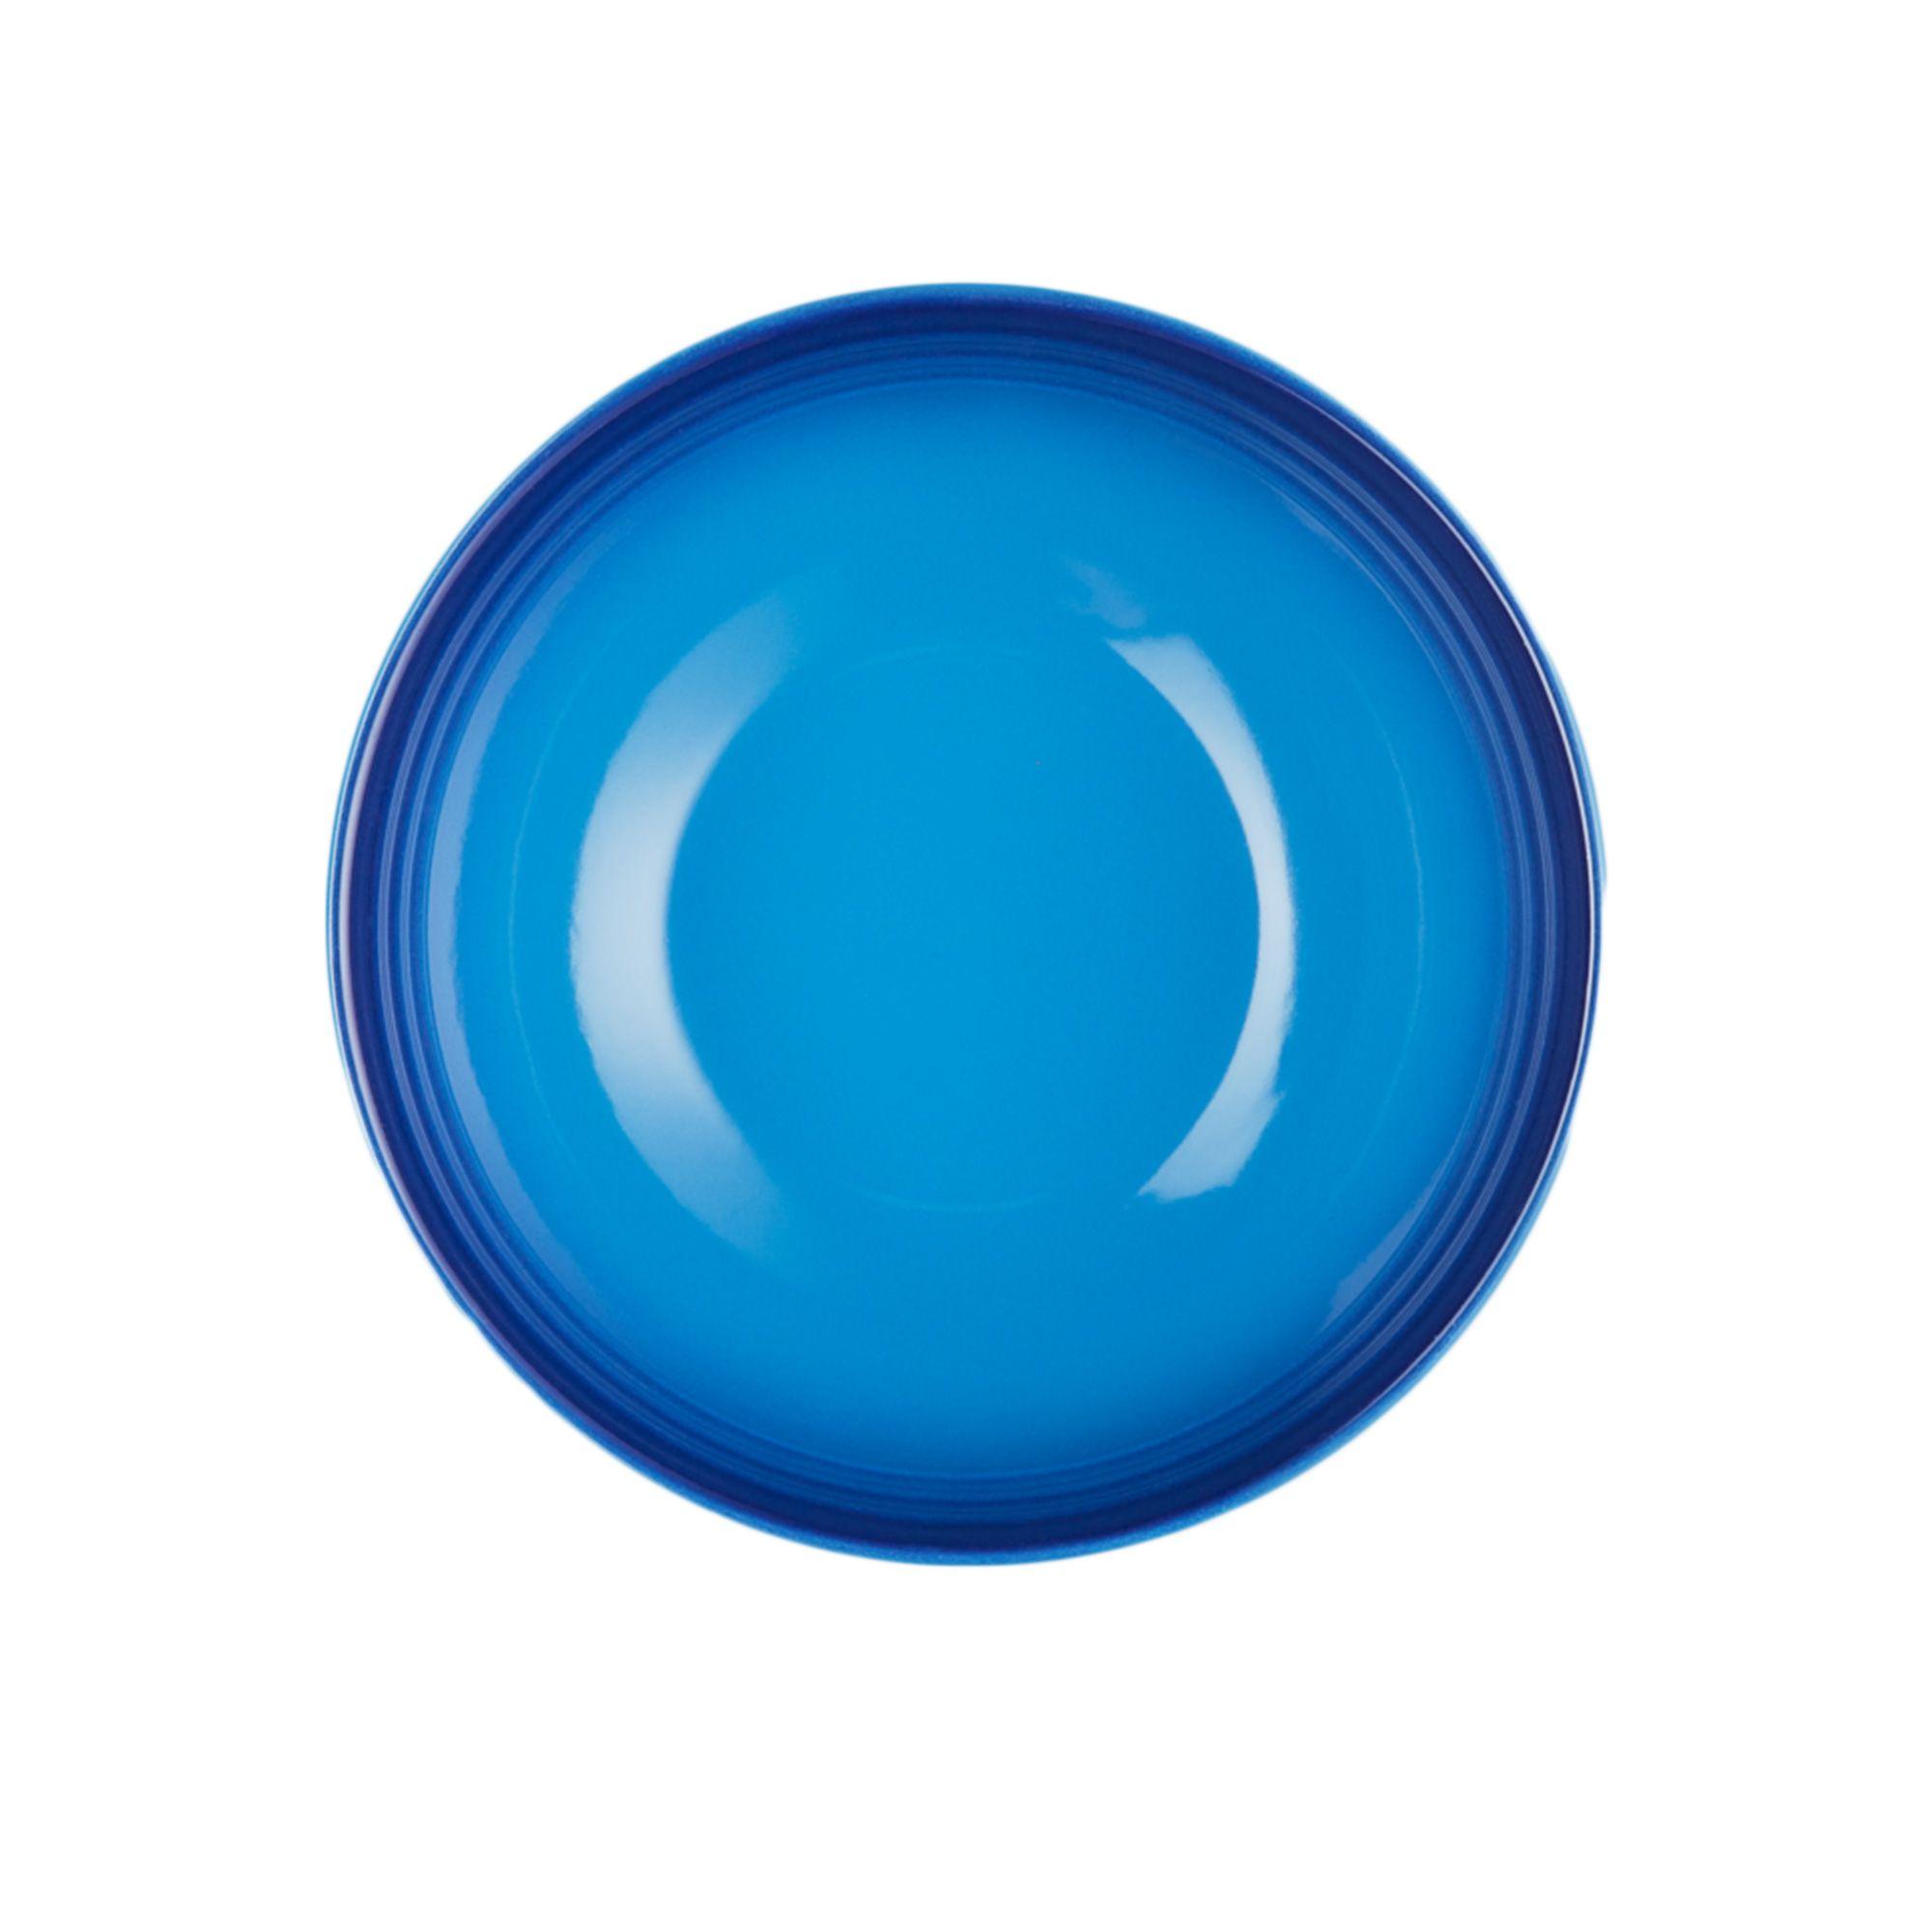 Le Creuset Stoneware Cereal Bowl Set of 4 Azure Blue Image 4